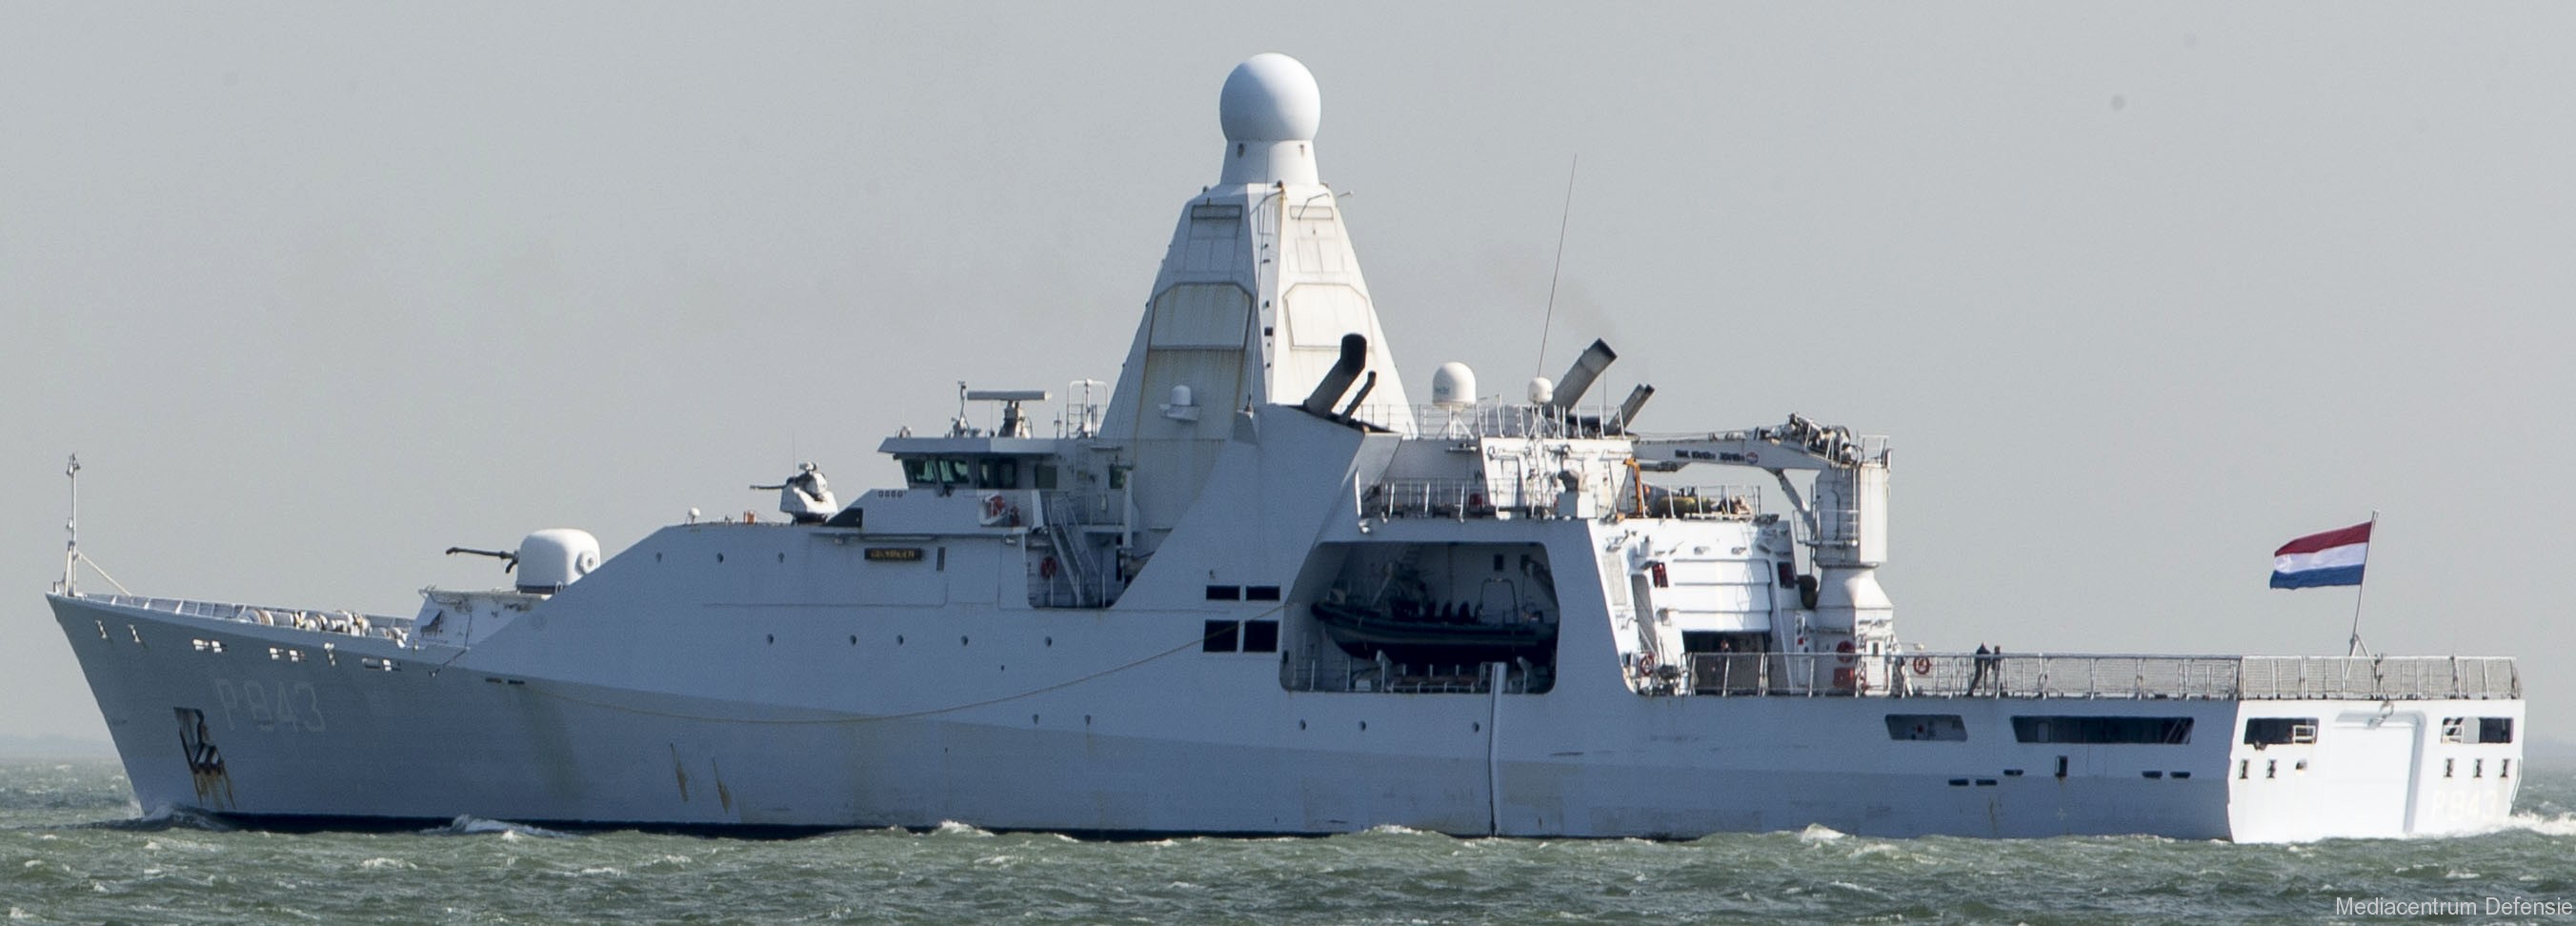 p-843 hnlms groningen holland class offshore patrol vessel opv royal netherlands navy 03 koninklijke marine